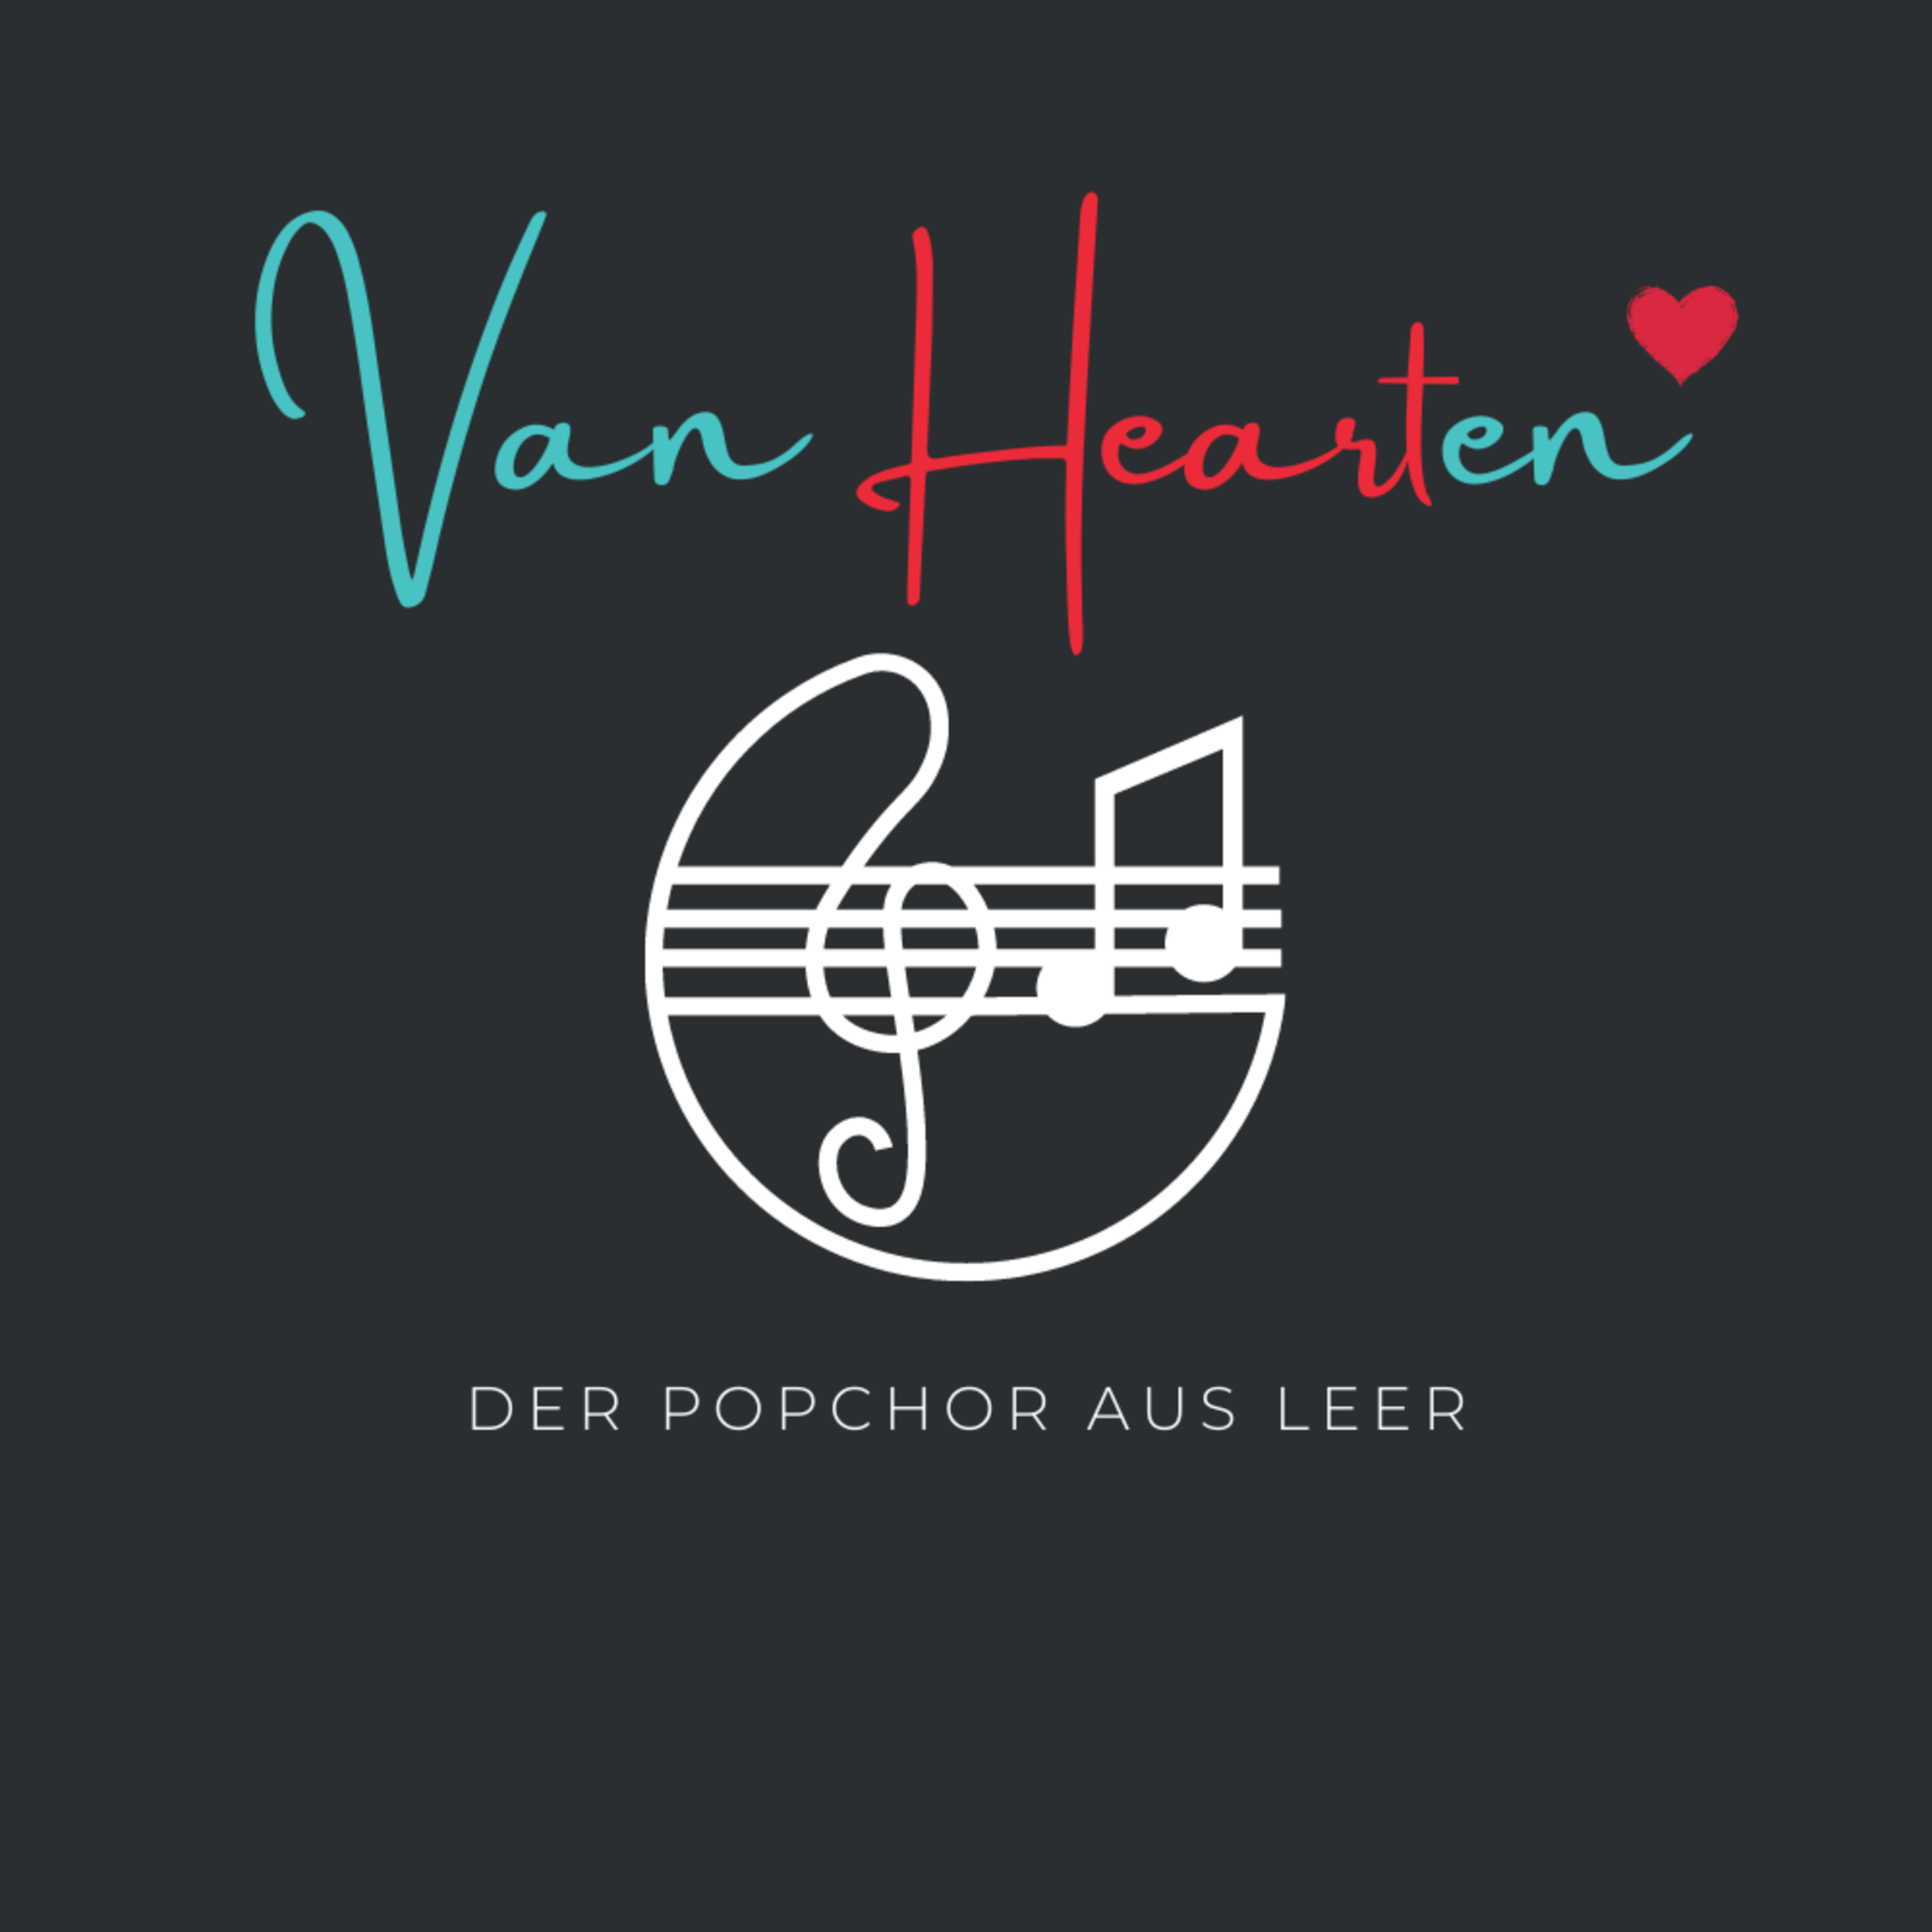 Das Logo des Popchores Van Hearten